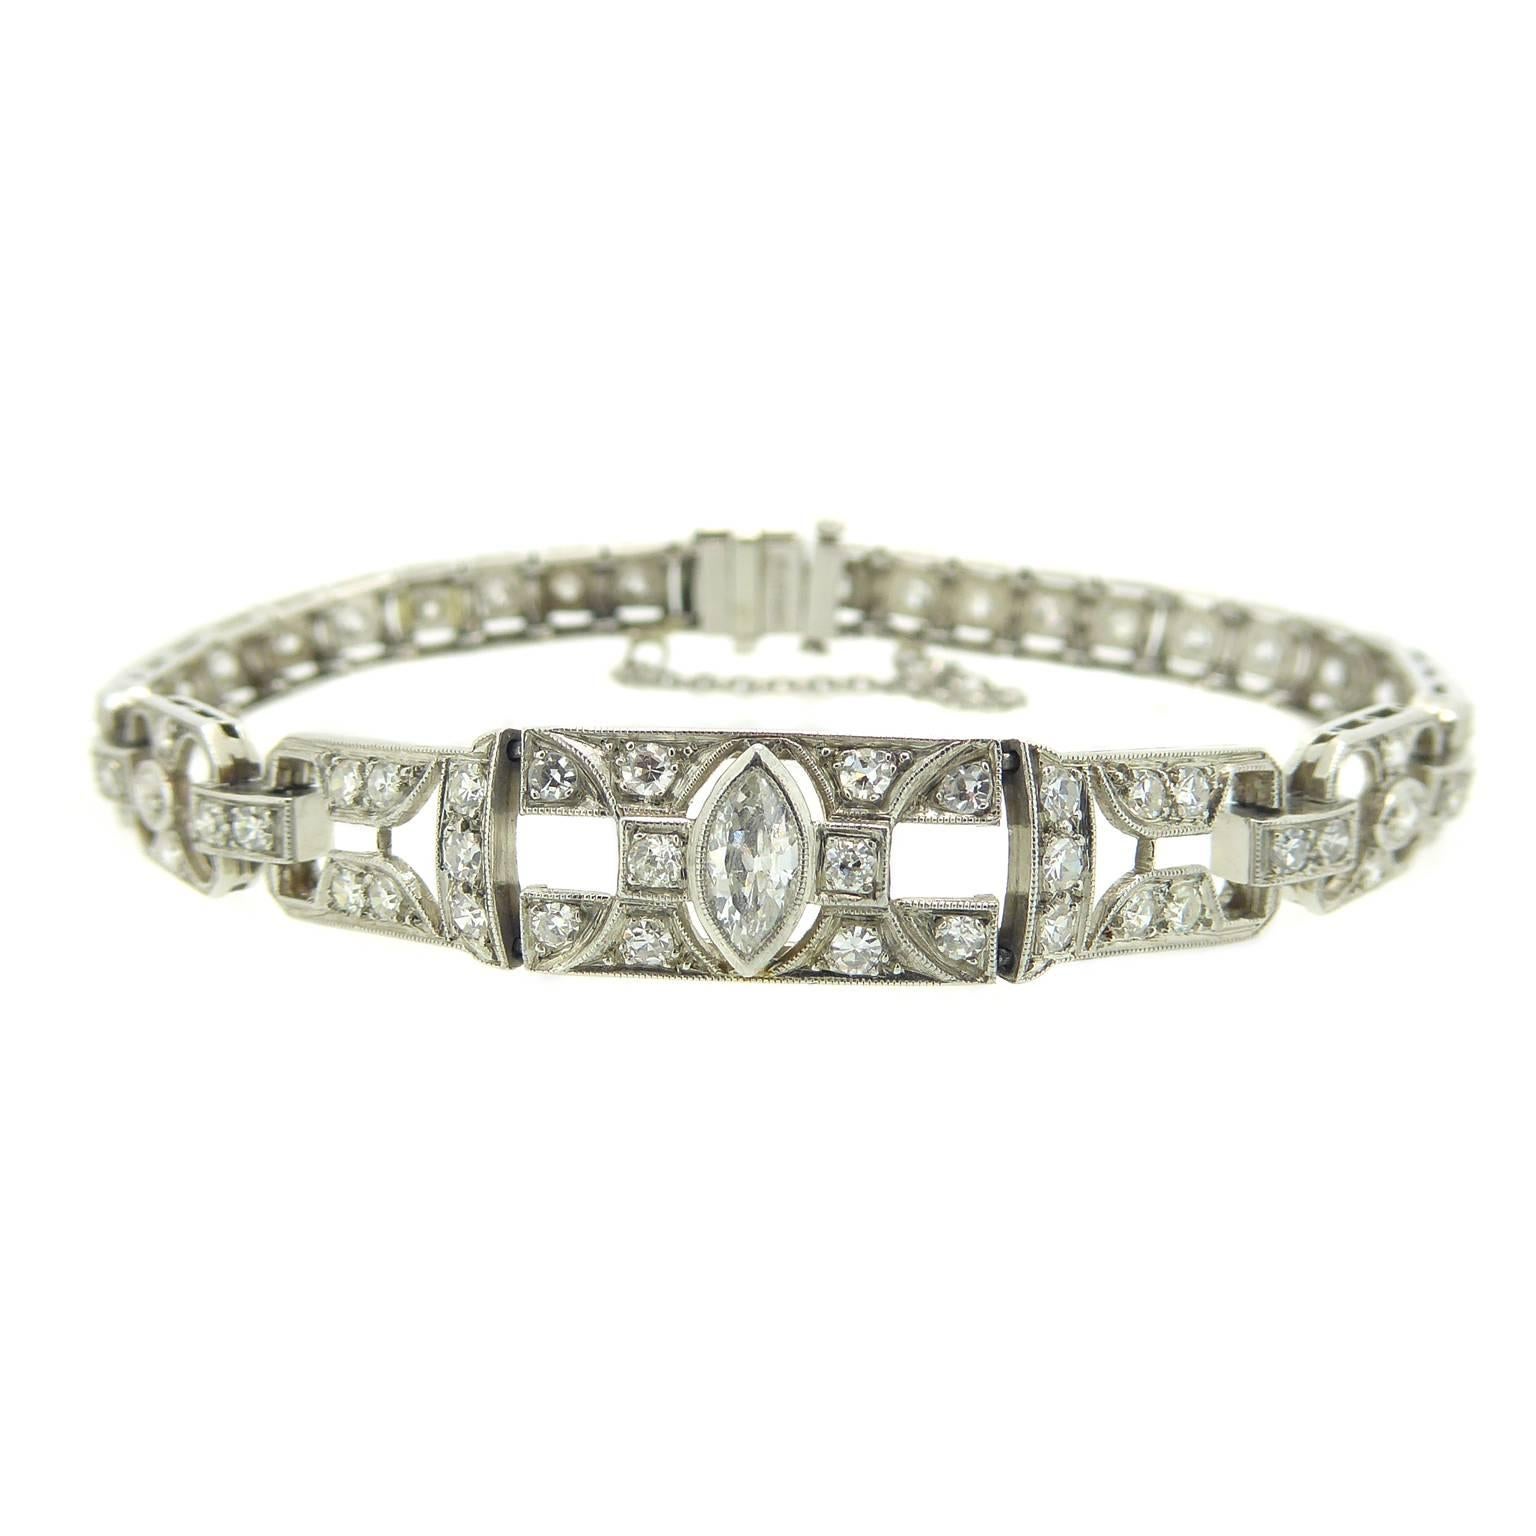 1.49 Carat Diamonds Platinum Bracelet circa 1940-1950